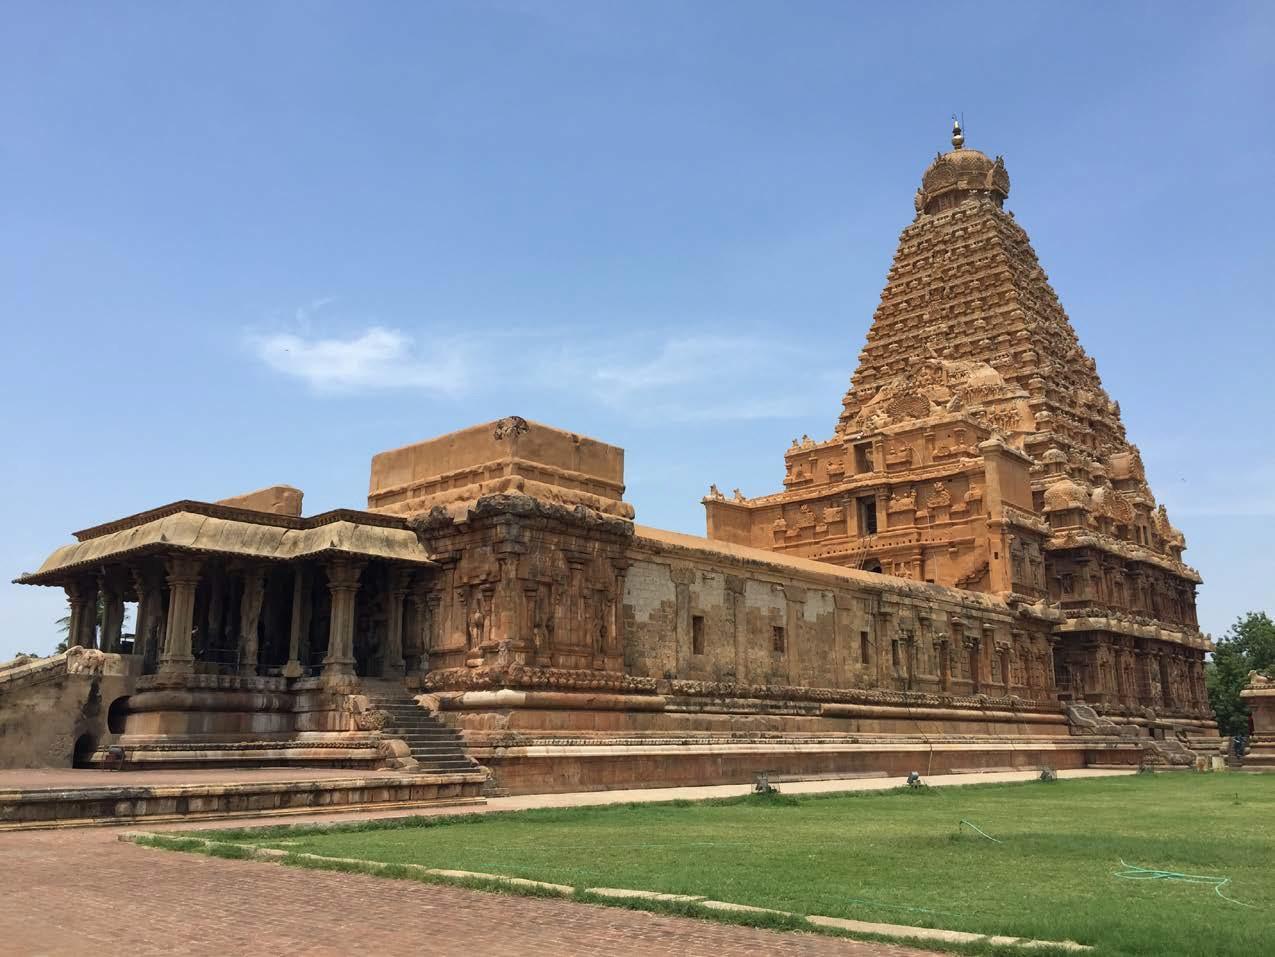 The Brihadeshwara Temple